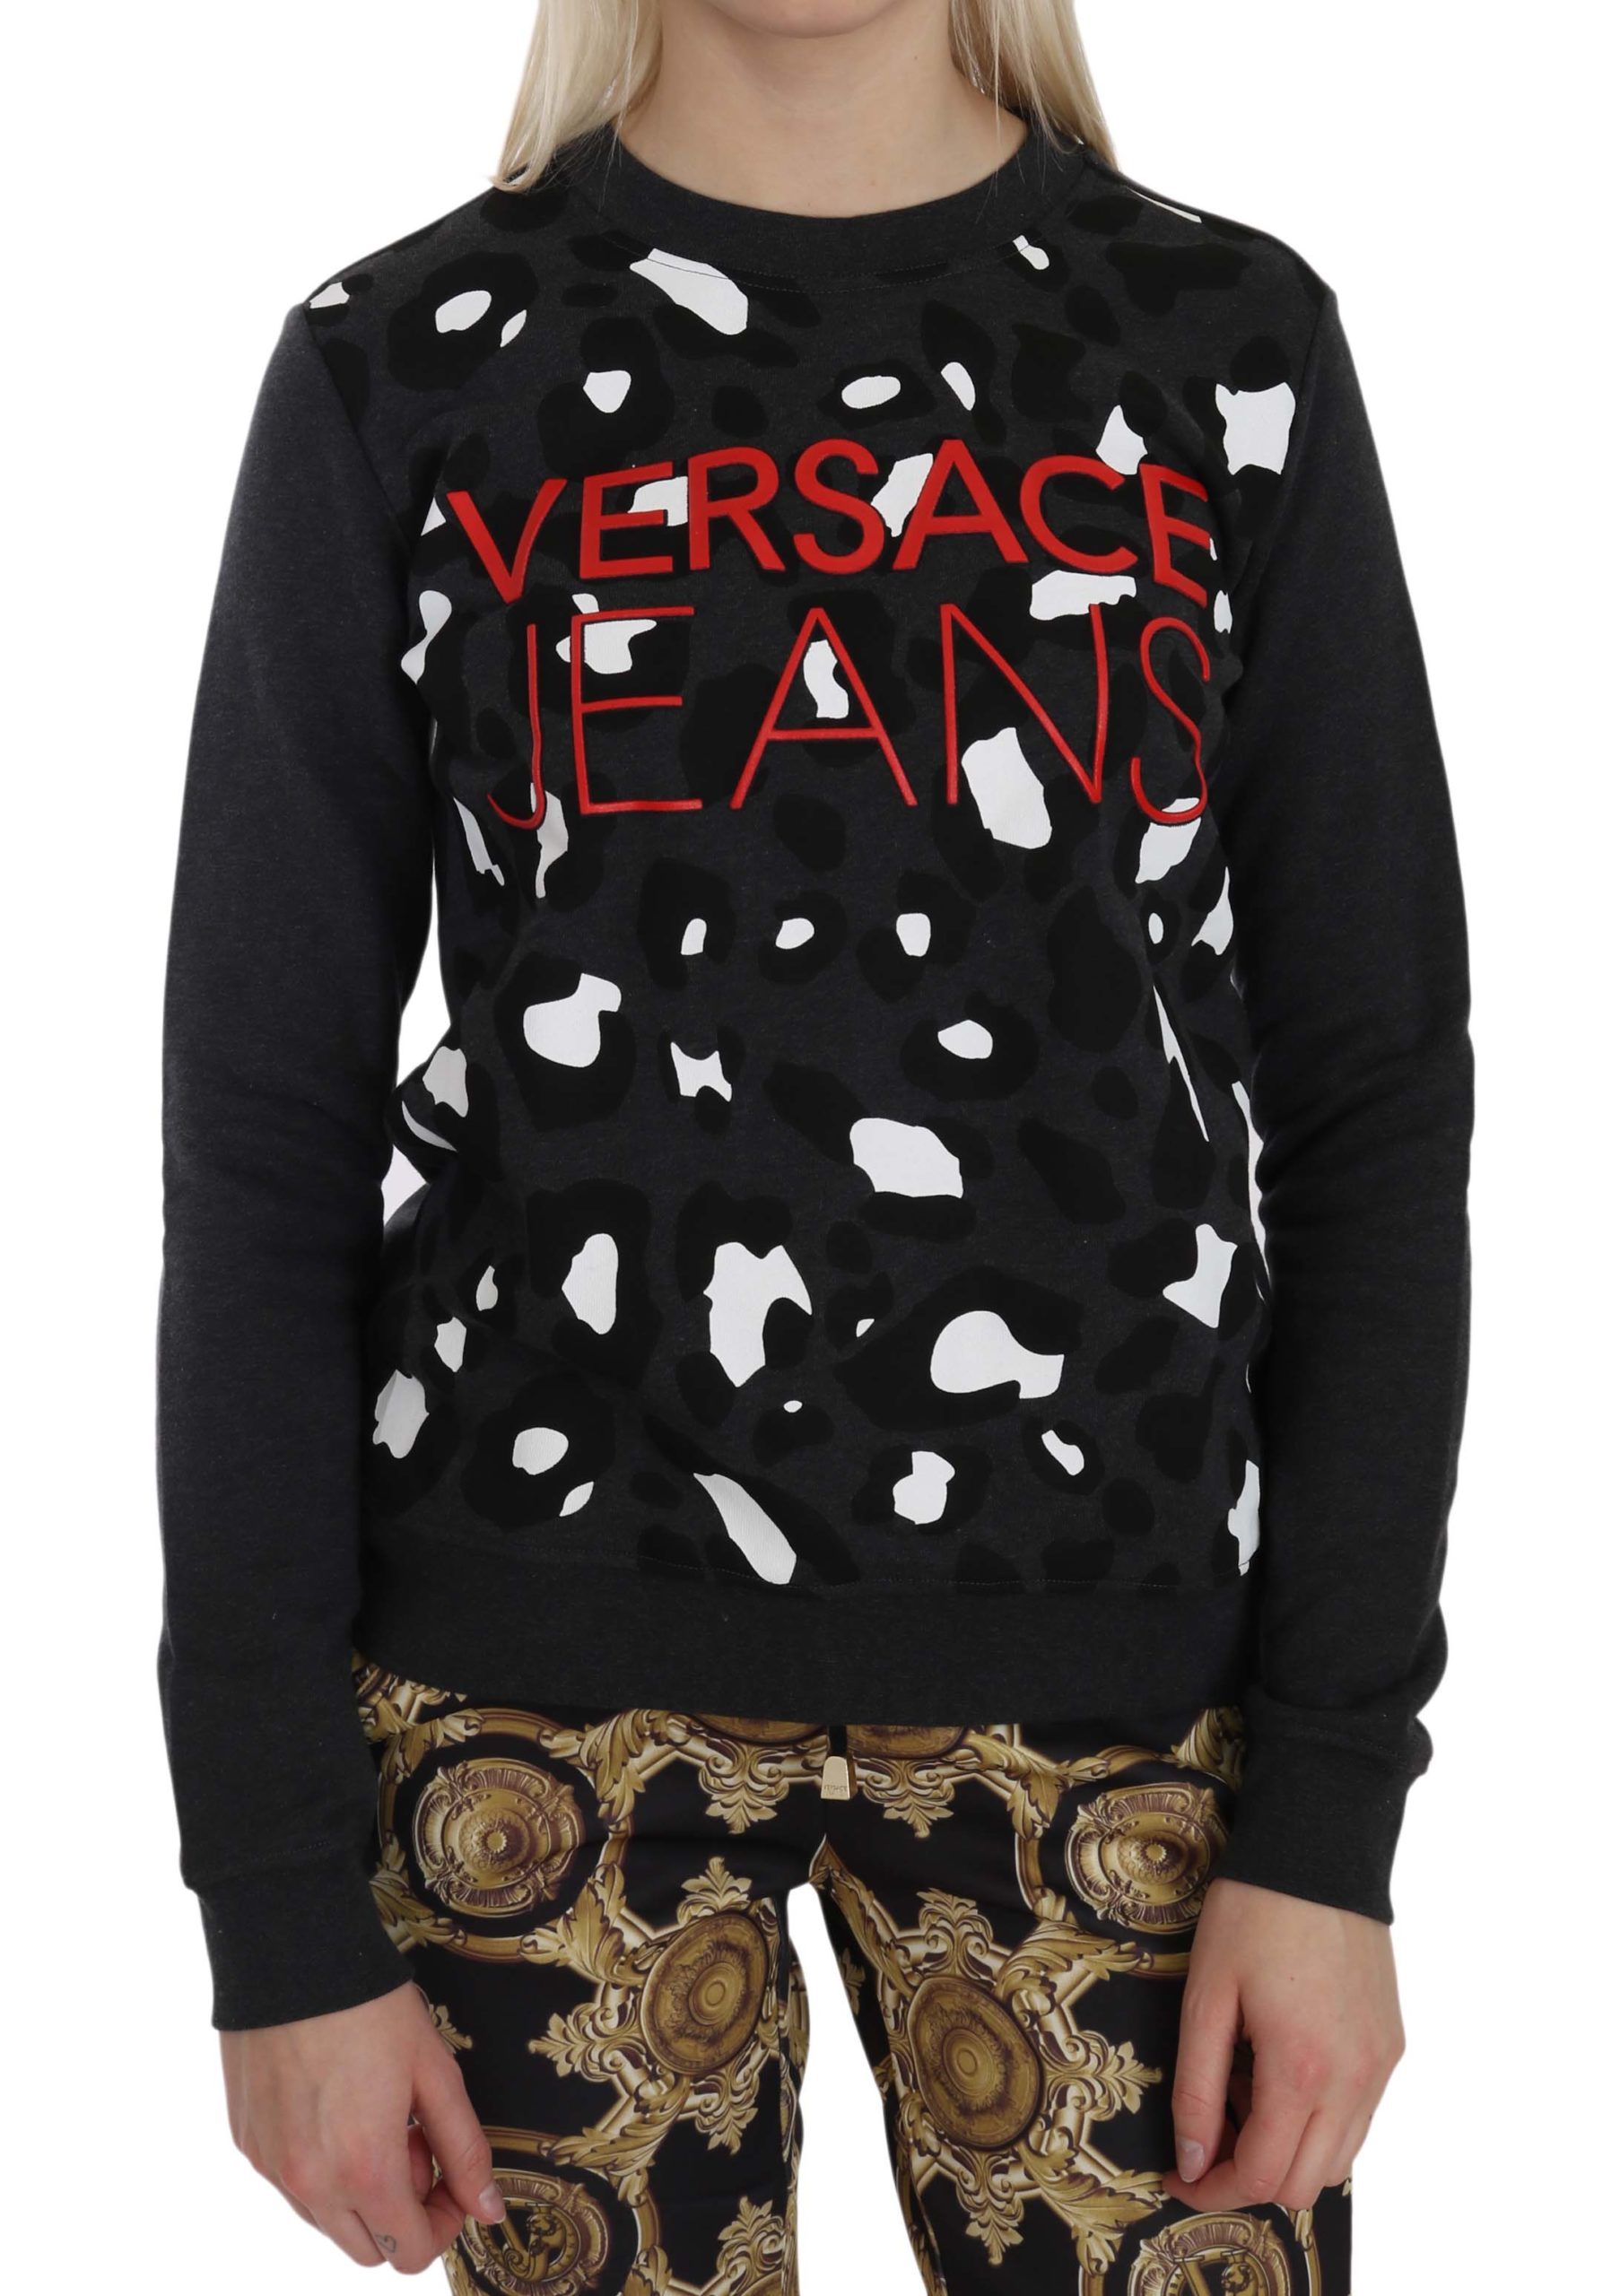 Versace Jeans Women's Leopard Print Couture Sweater Gray TSH2477 - IT38|XS